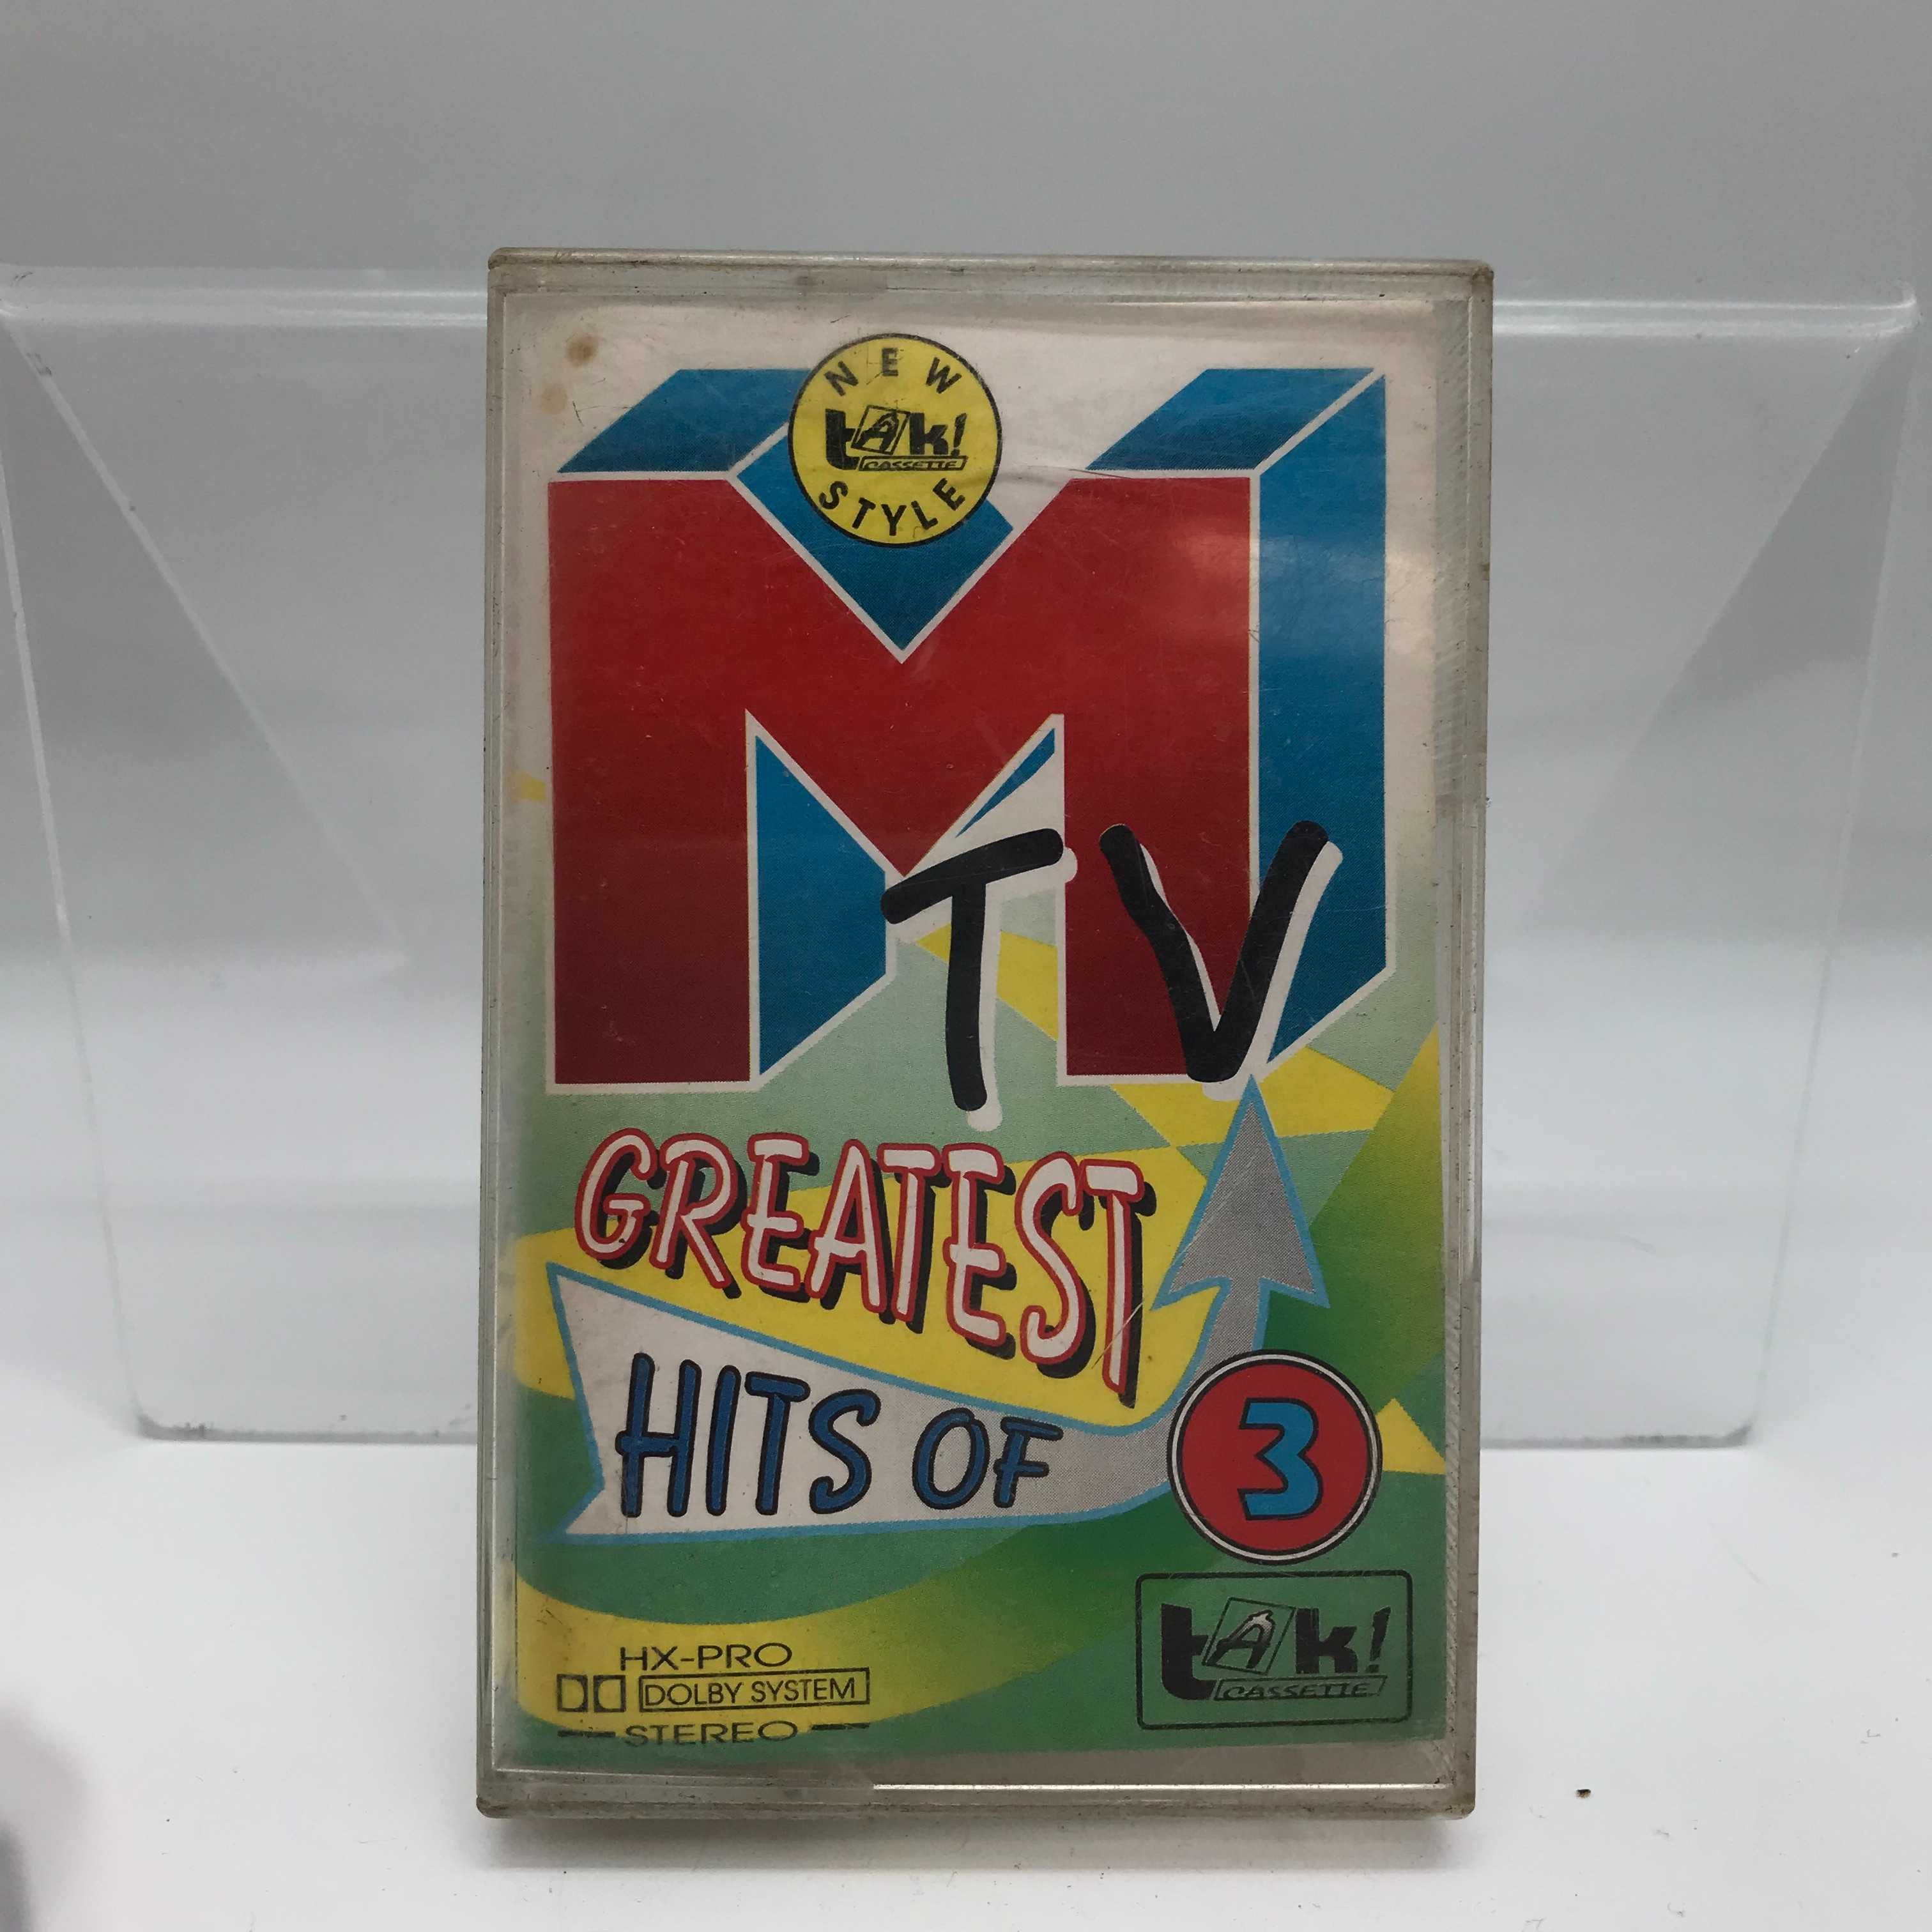 kaseta greatest hits of mtv 3 (2801)